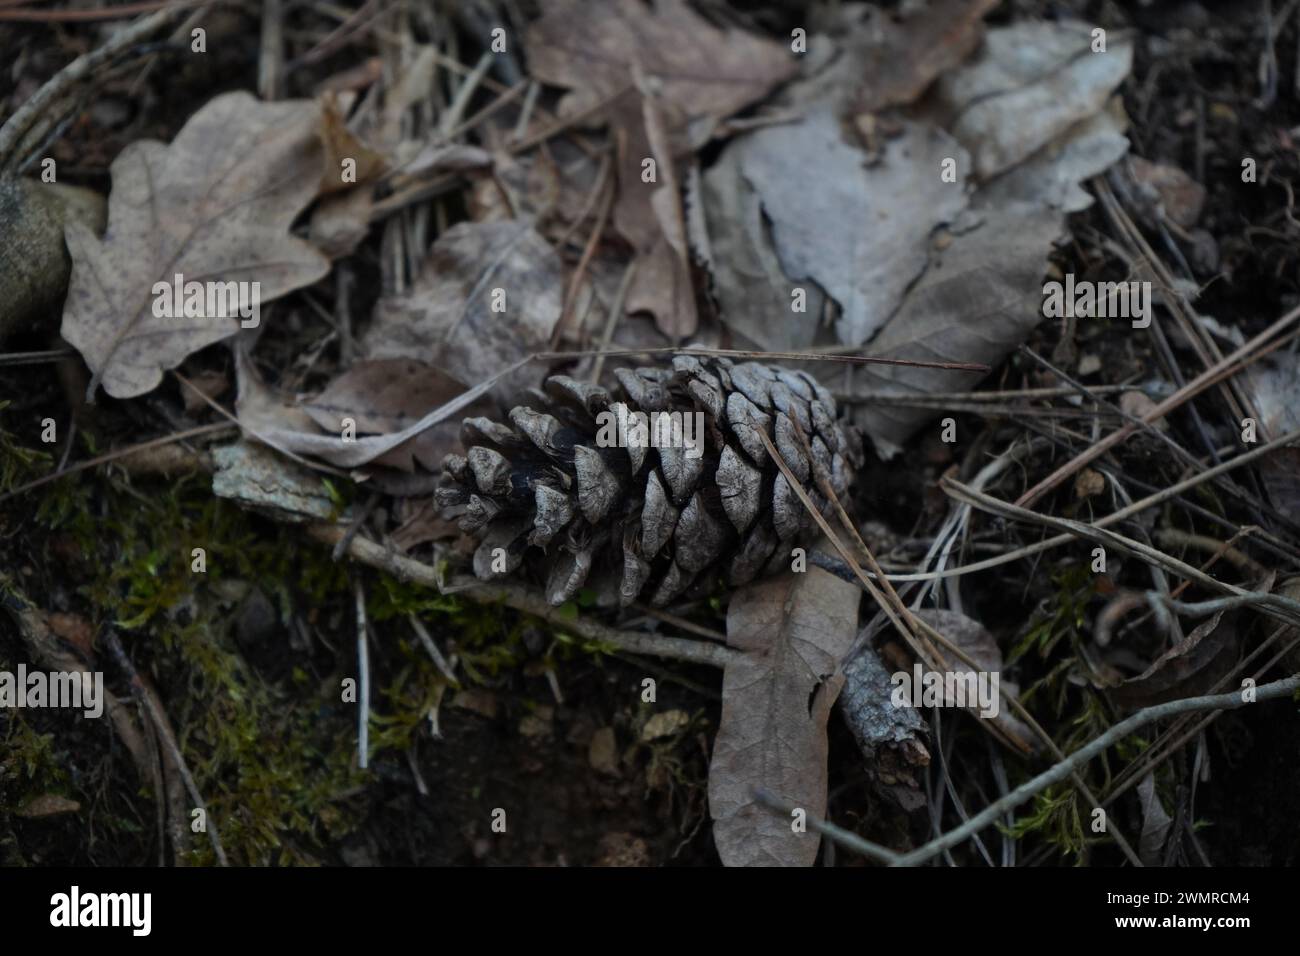 Die Teichkiefer, schwarze Rindenkiefer, Lorbeerkiefer, Sumpfkiefer oder Pocosin-Kiefer (Pinus serotina) Stockfoto